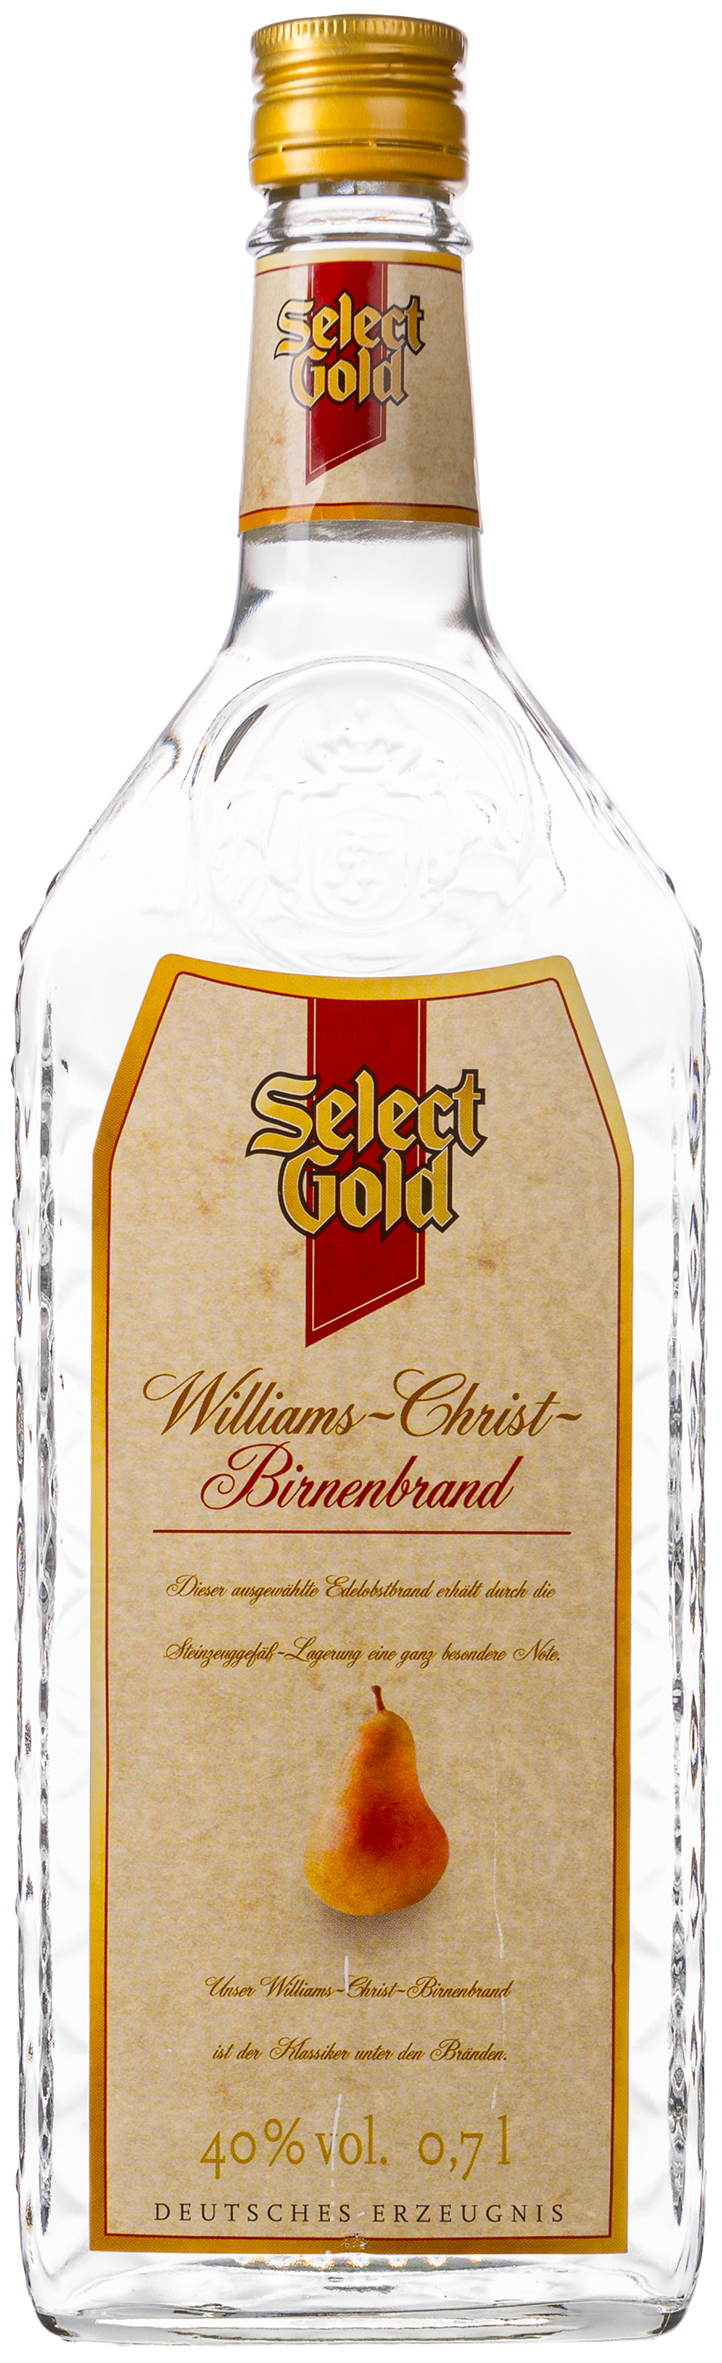 Select Gold Williams Christ Birnenbrand 40% vol. 0,7L